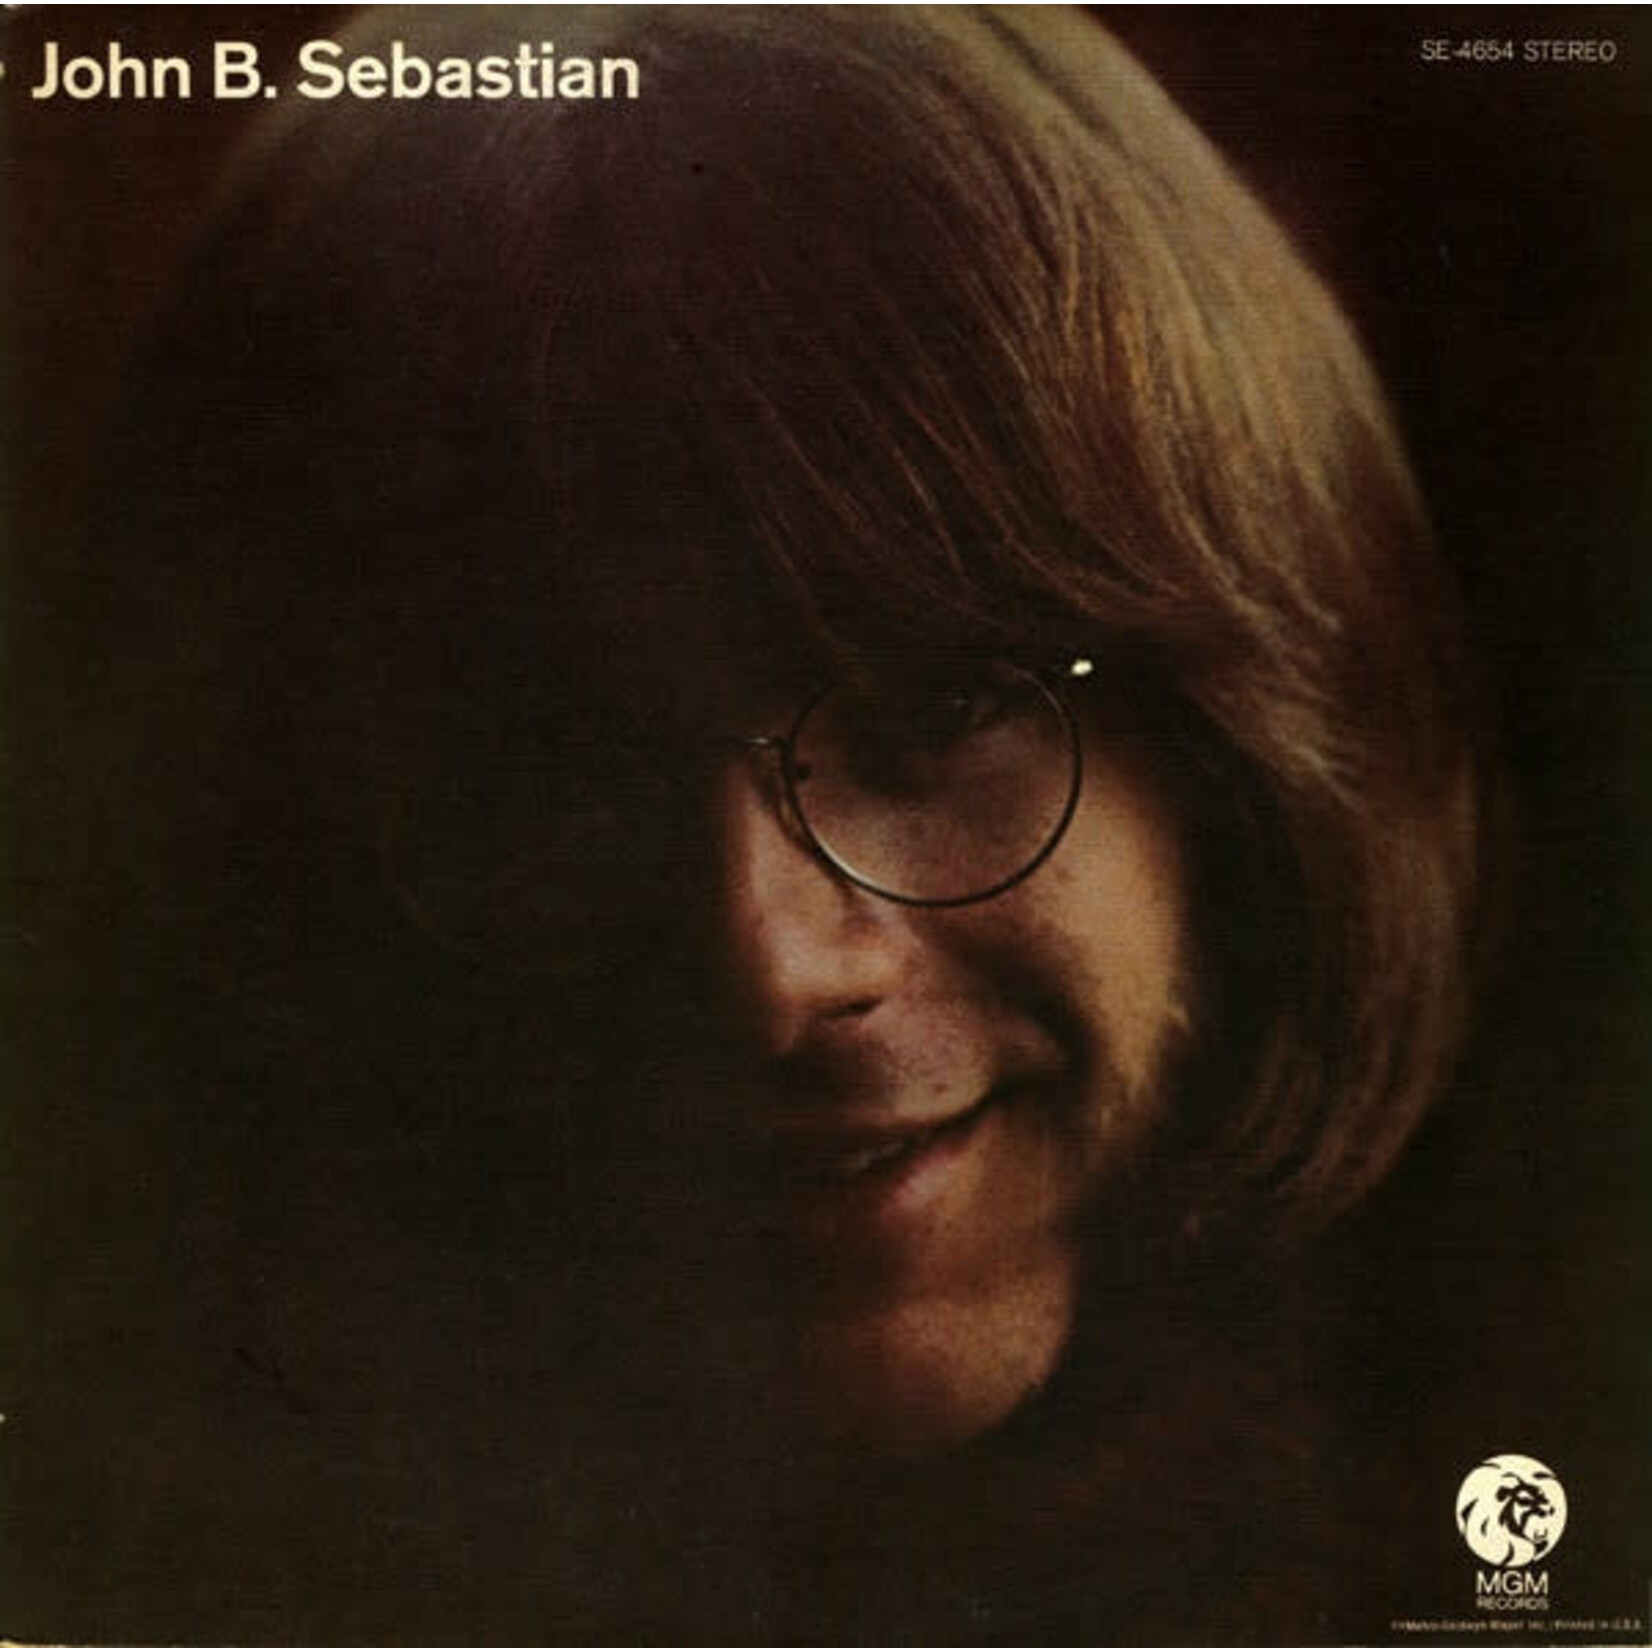 [Vintage] John B. Sebastian - self-titled